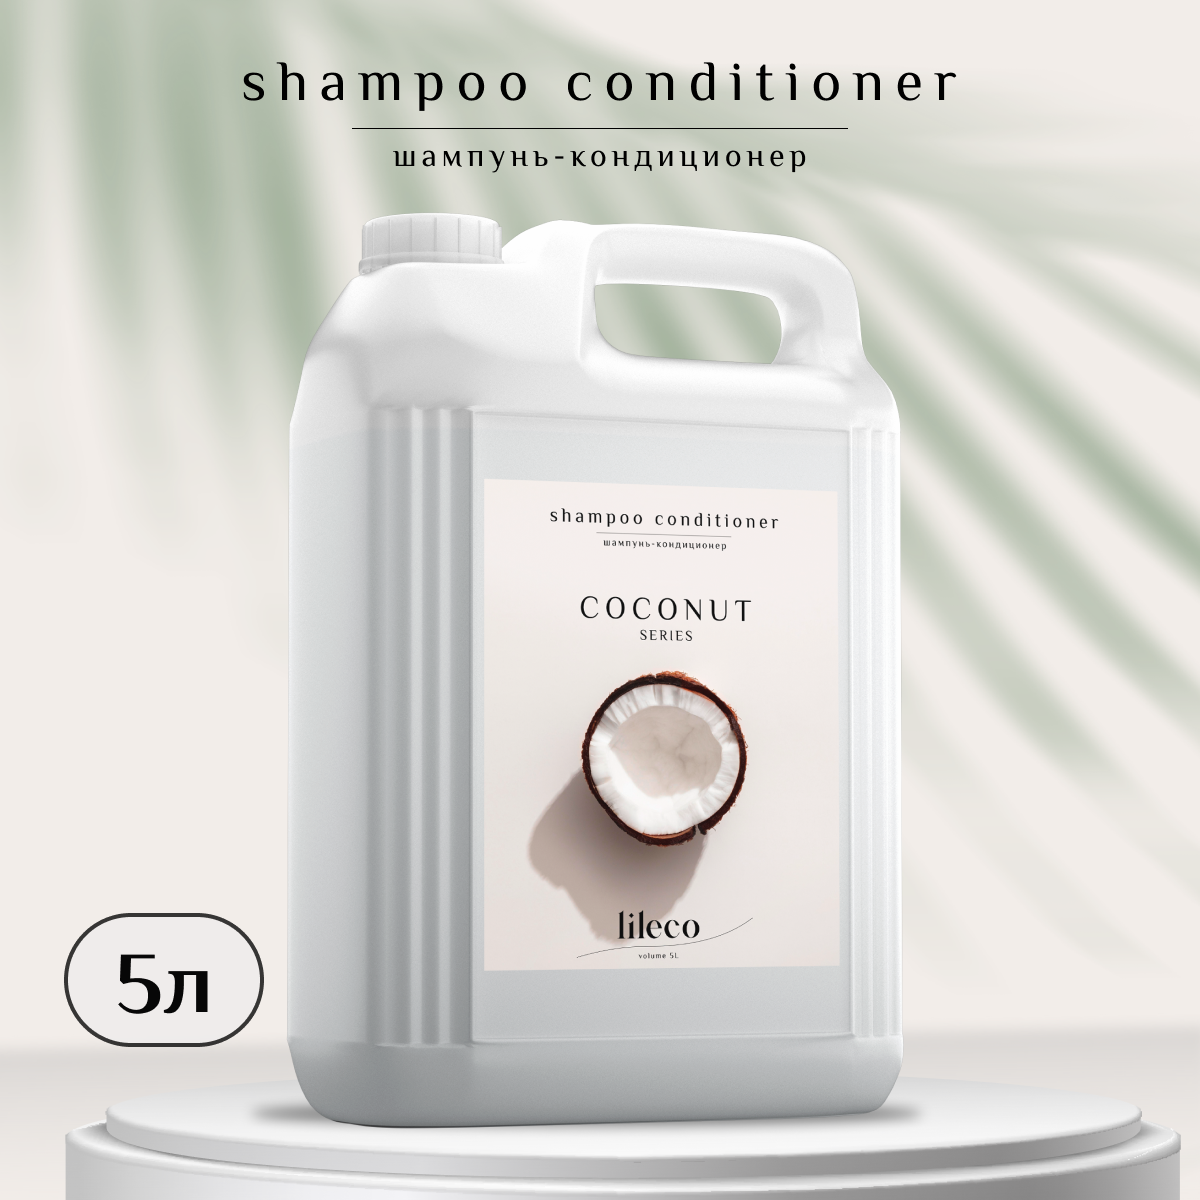 Шампунь для волос Lil Eco с ароматом кокоса 5л dr seed шампунь для волос с ароматом освежающего лимона revitalize shampoo lemon breeze